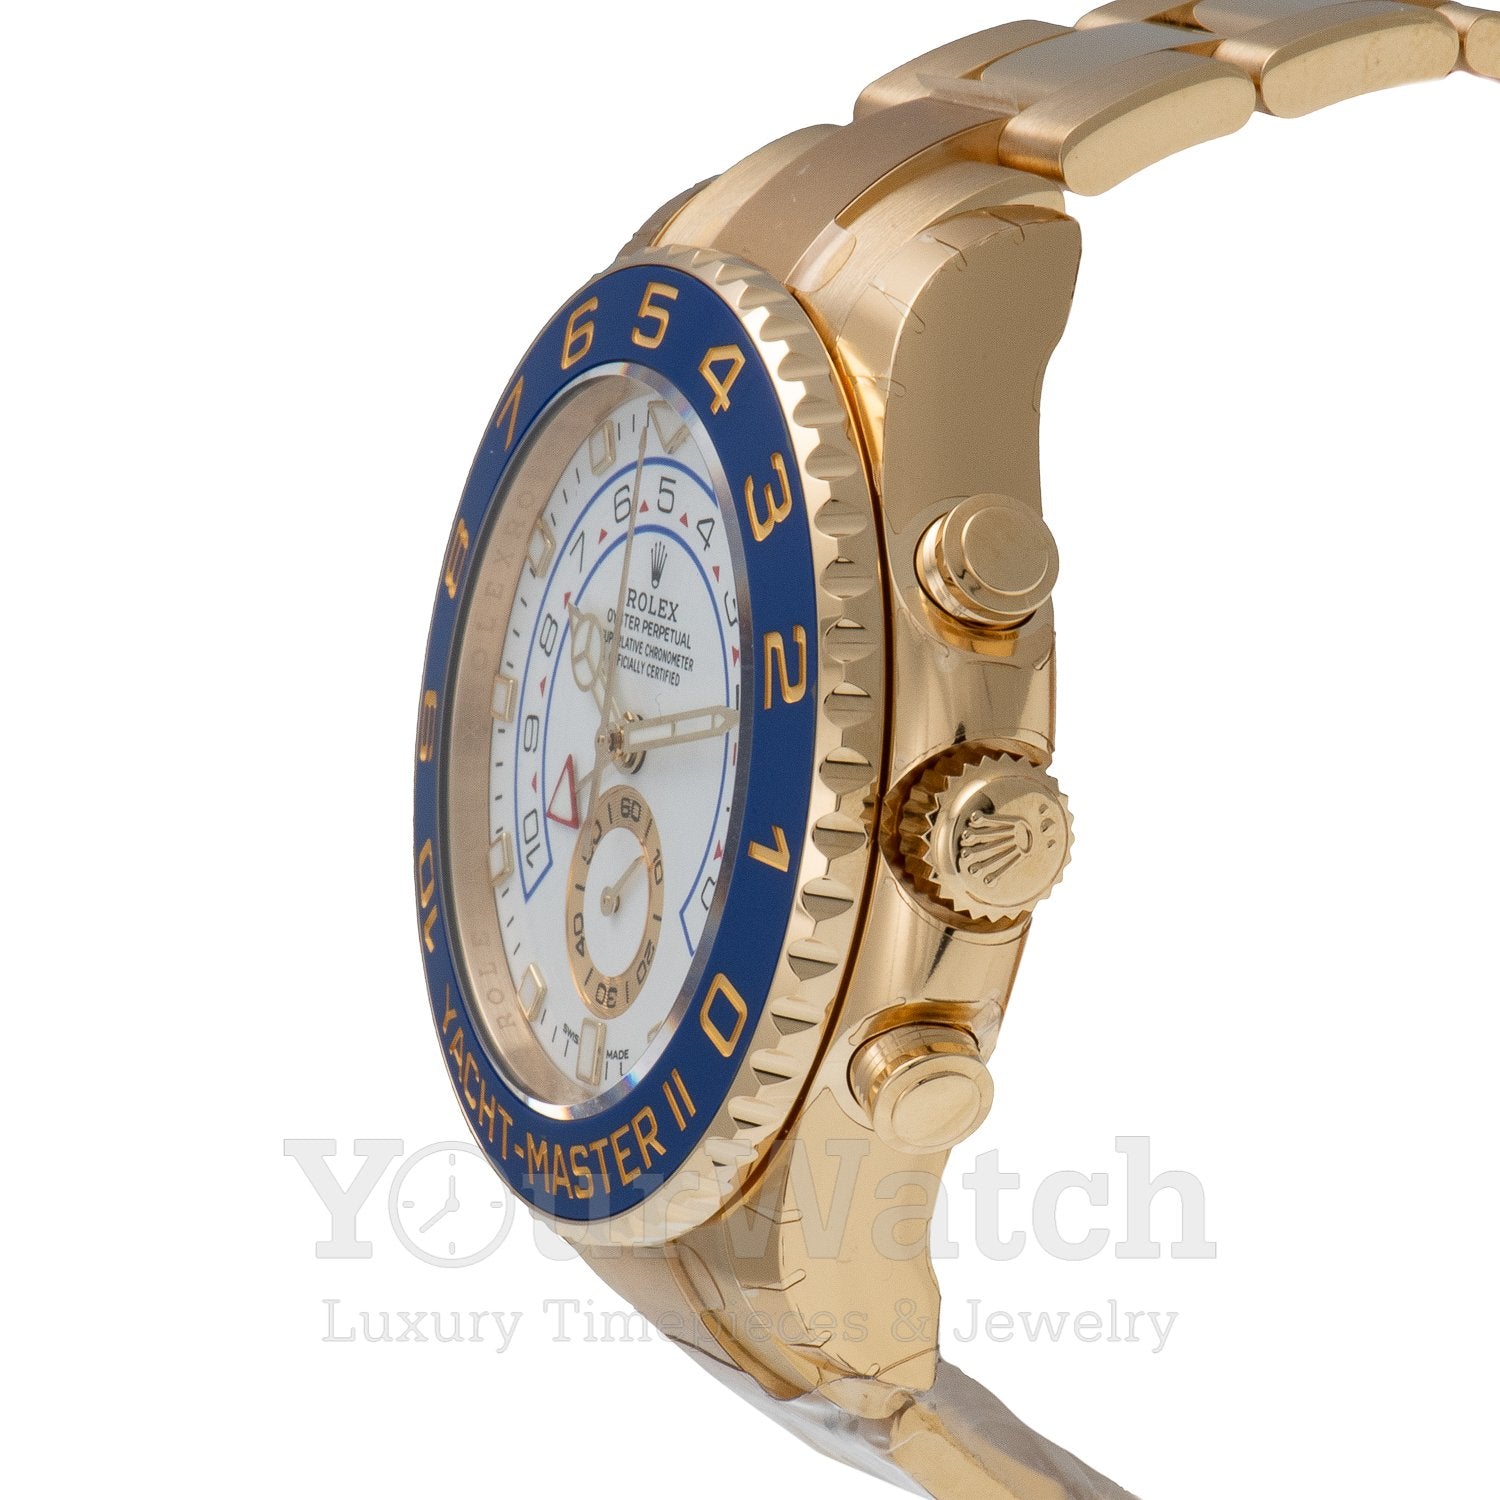 Rolex Yacht-Master II Regatta Chronograph 18K Yellow Gold 116688